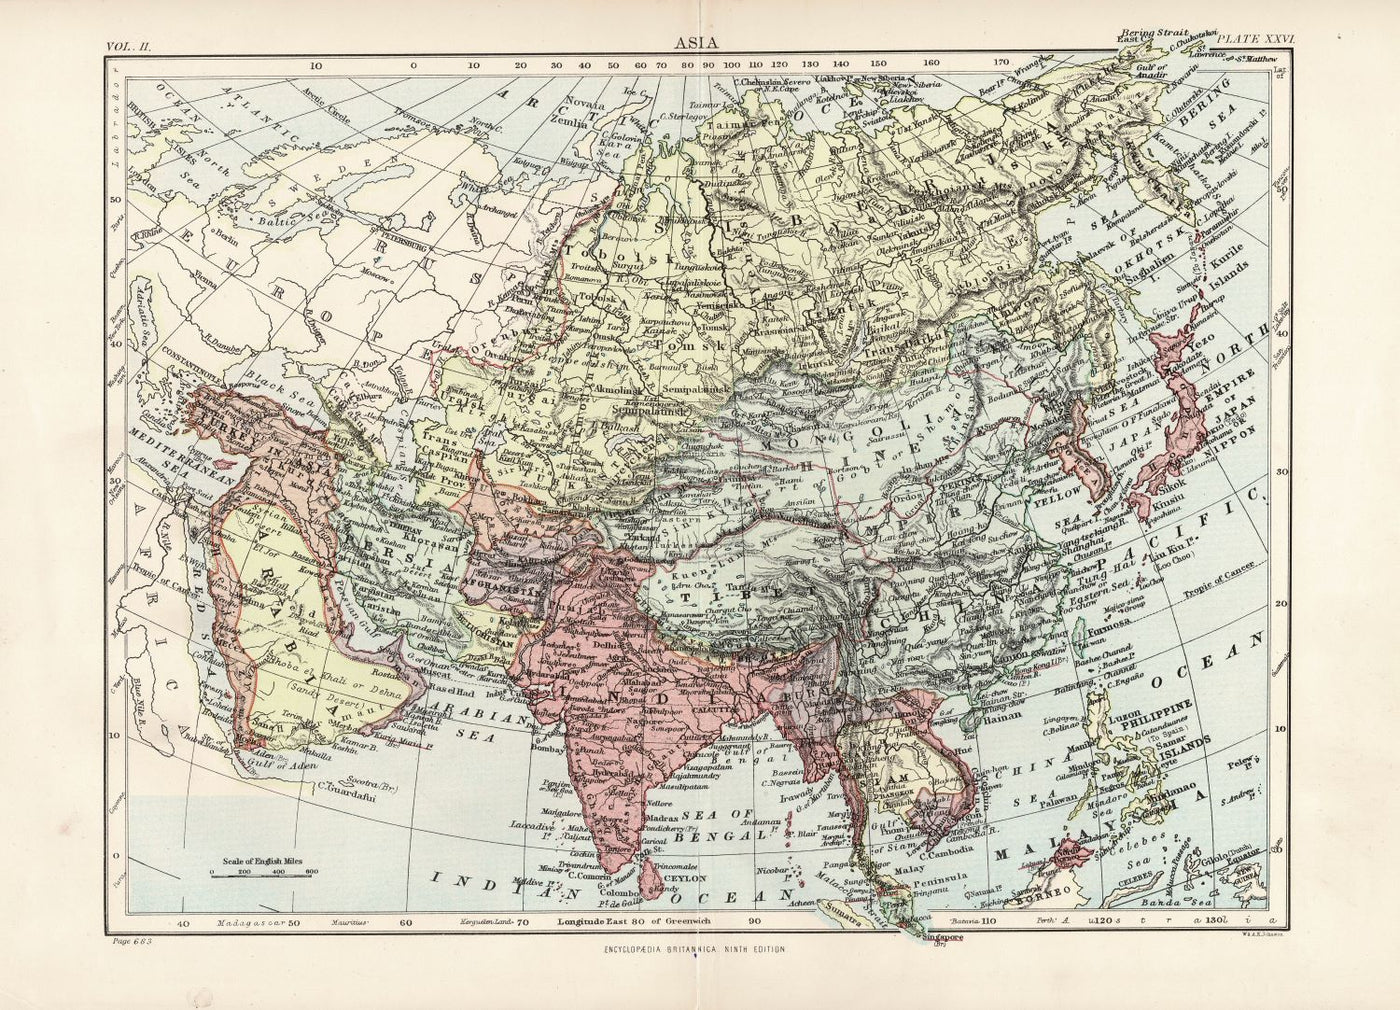 Asia guaranteed original antique map published c.1889